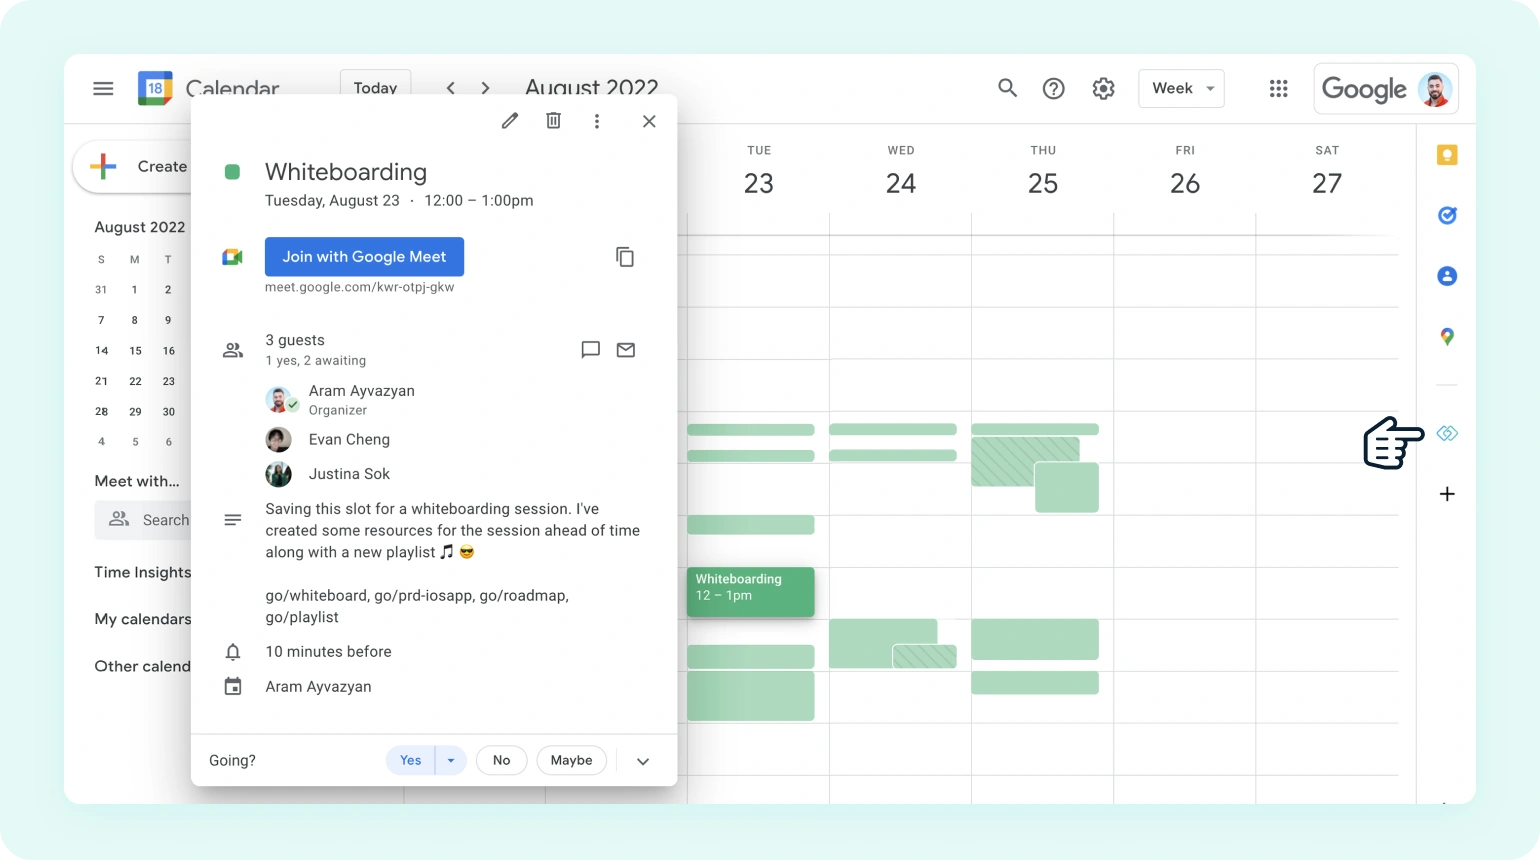 Converting go links in a Google Calendar event